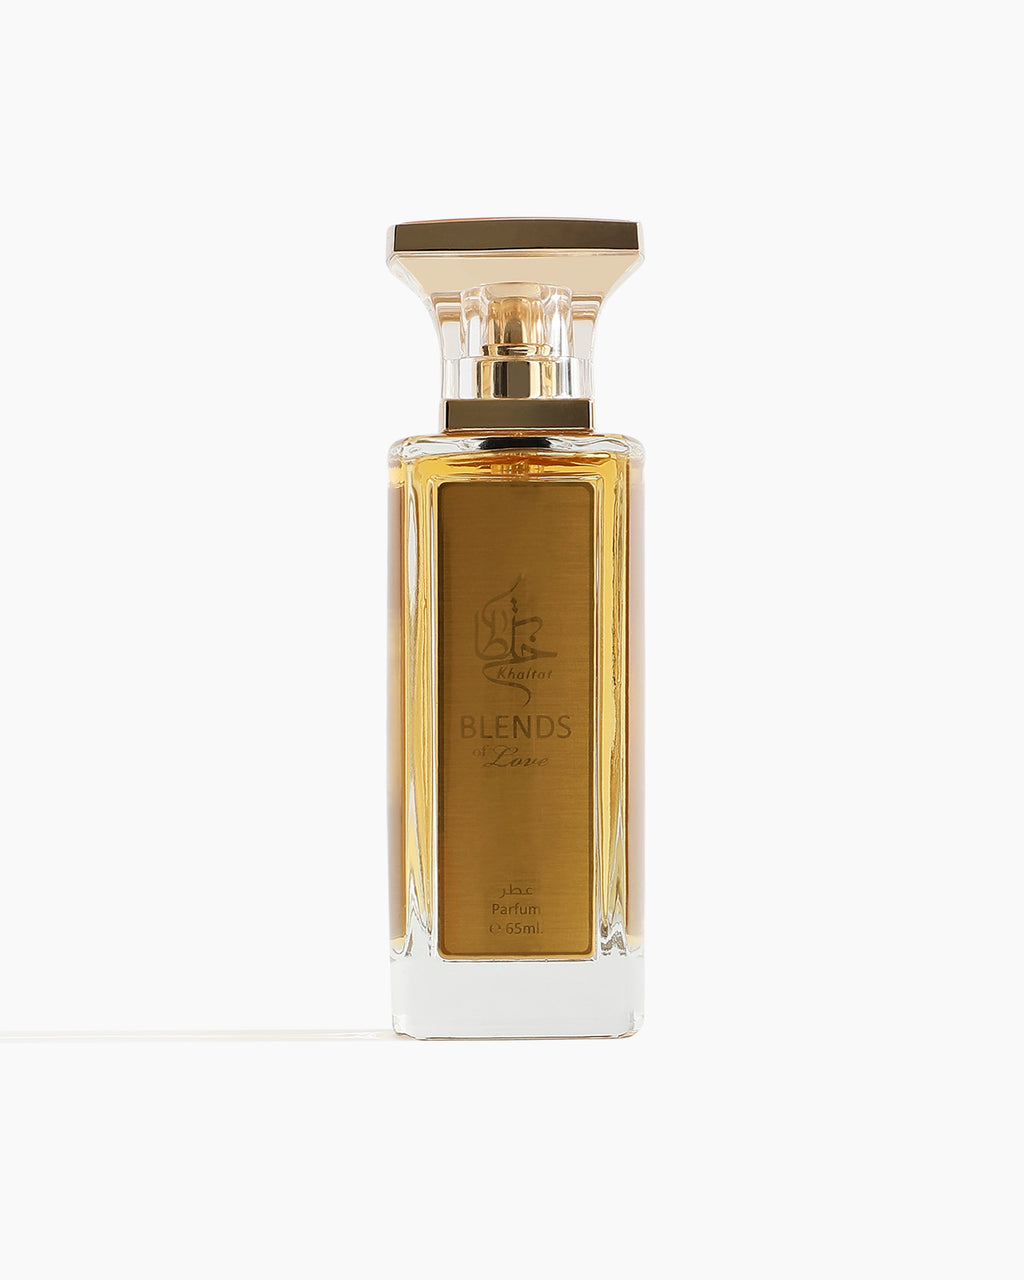 Oud Lignum Eau De Parfum- Mens – Perfumeofarabialondon